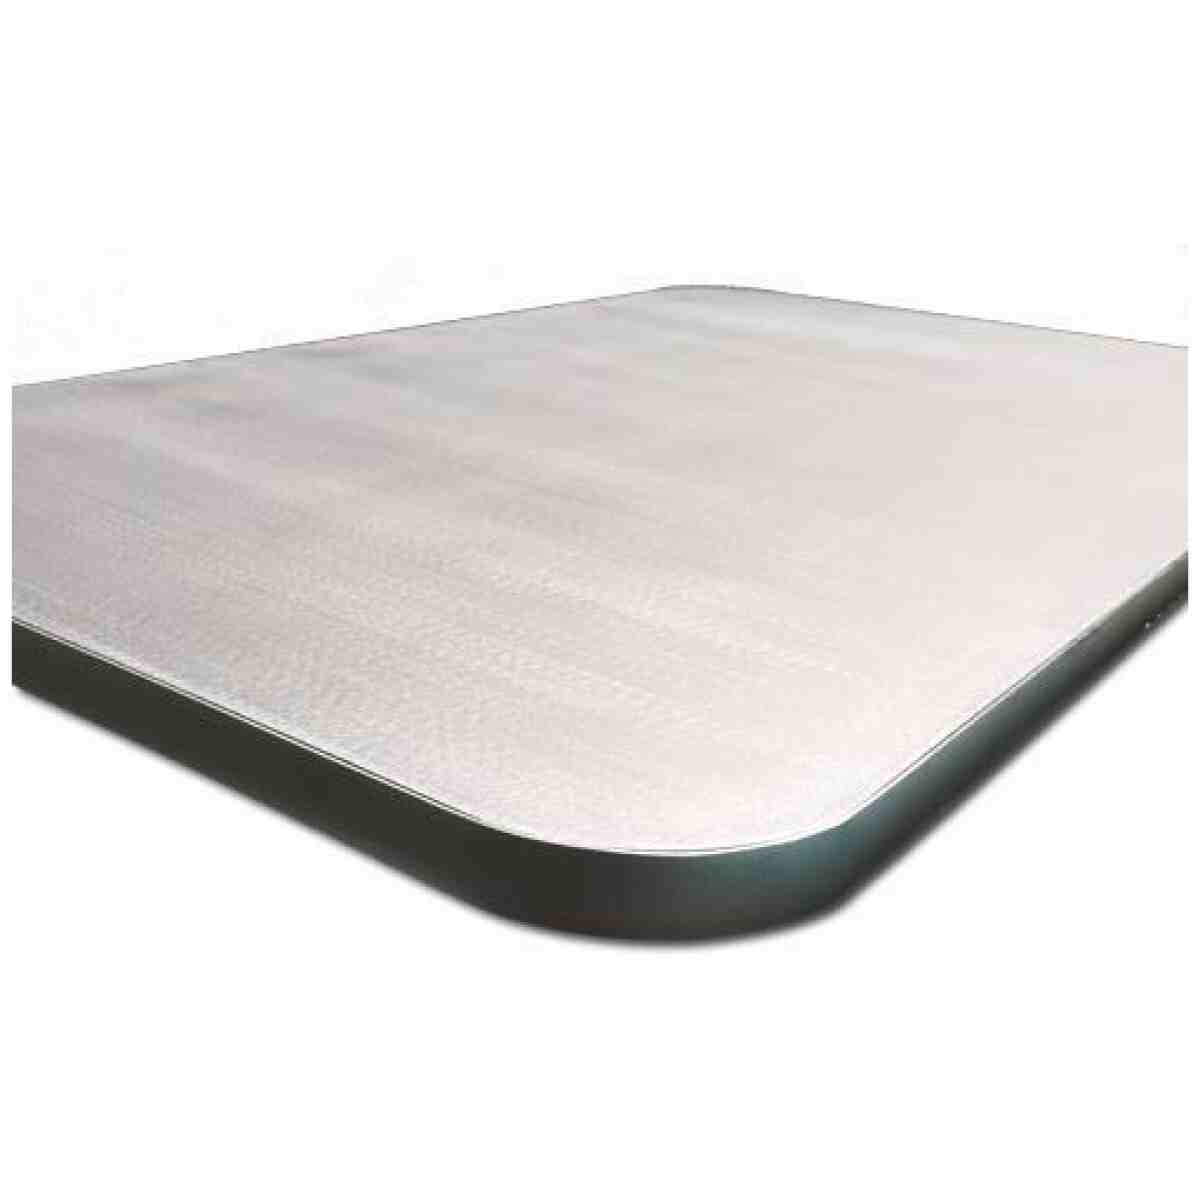 USA Honeycomb Aluminum Infant Platen - 10" X 24" ROQ®